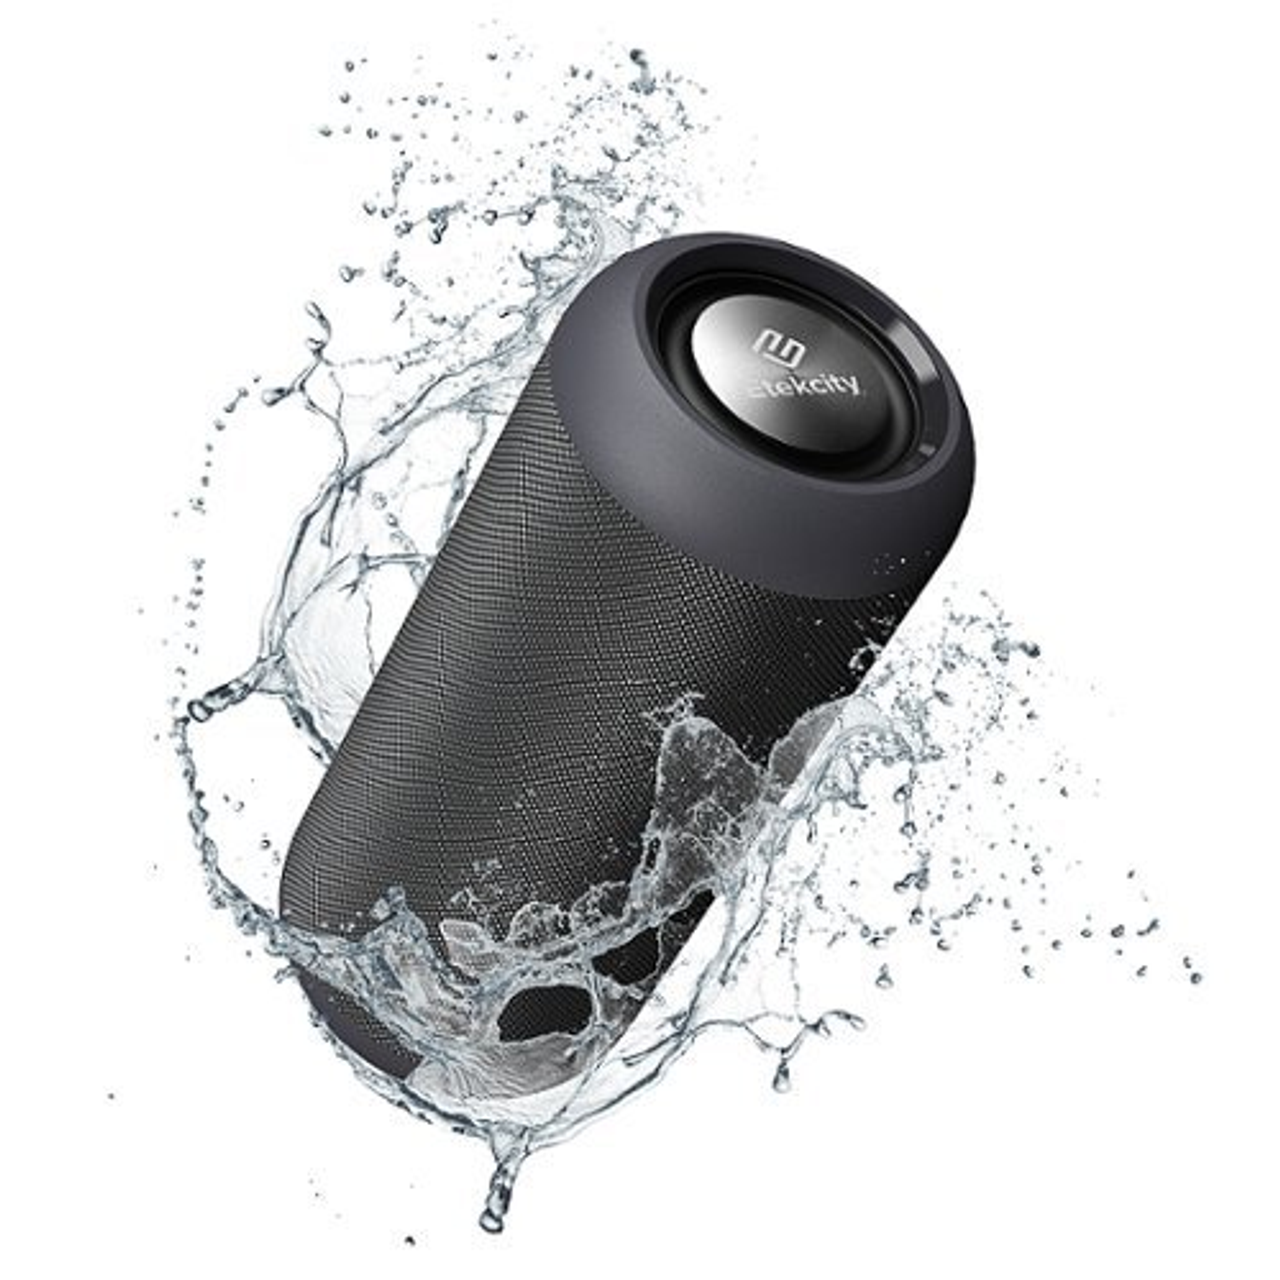 Etekcity Vivasound Portable Bluetooth Speaker - Black